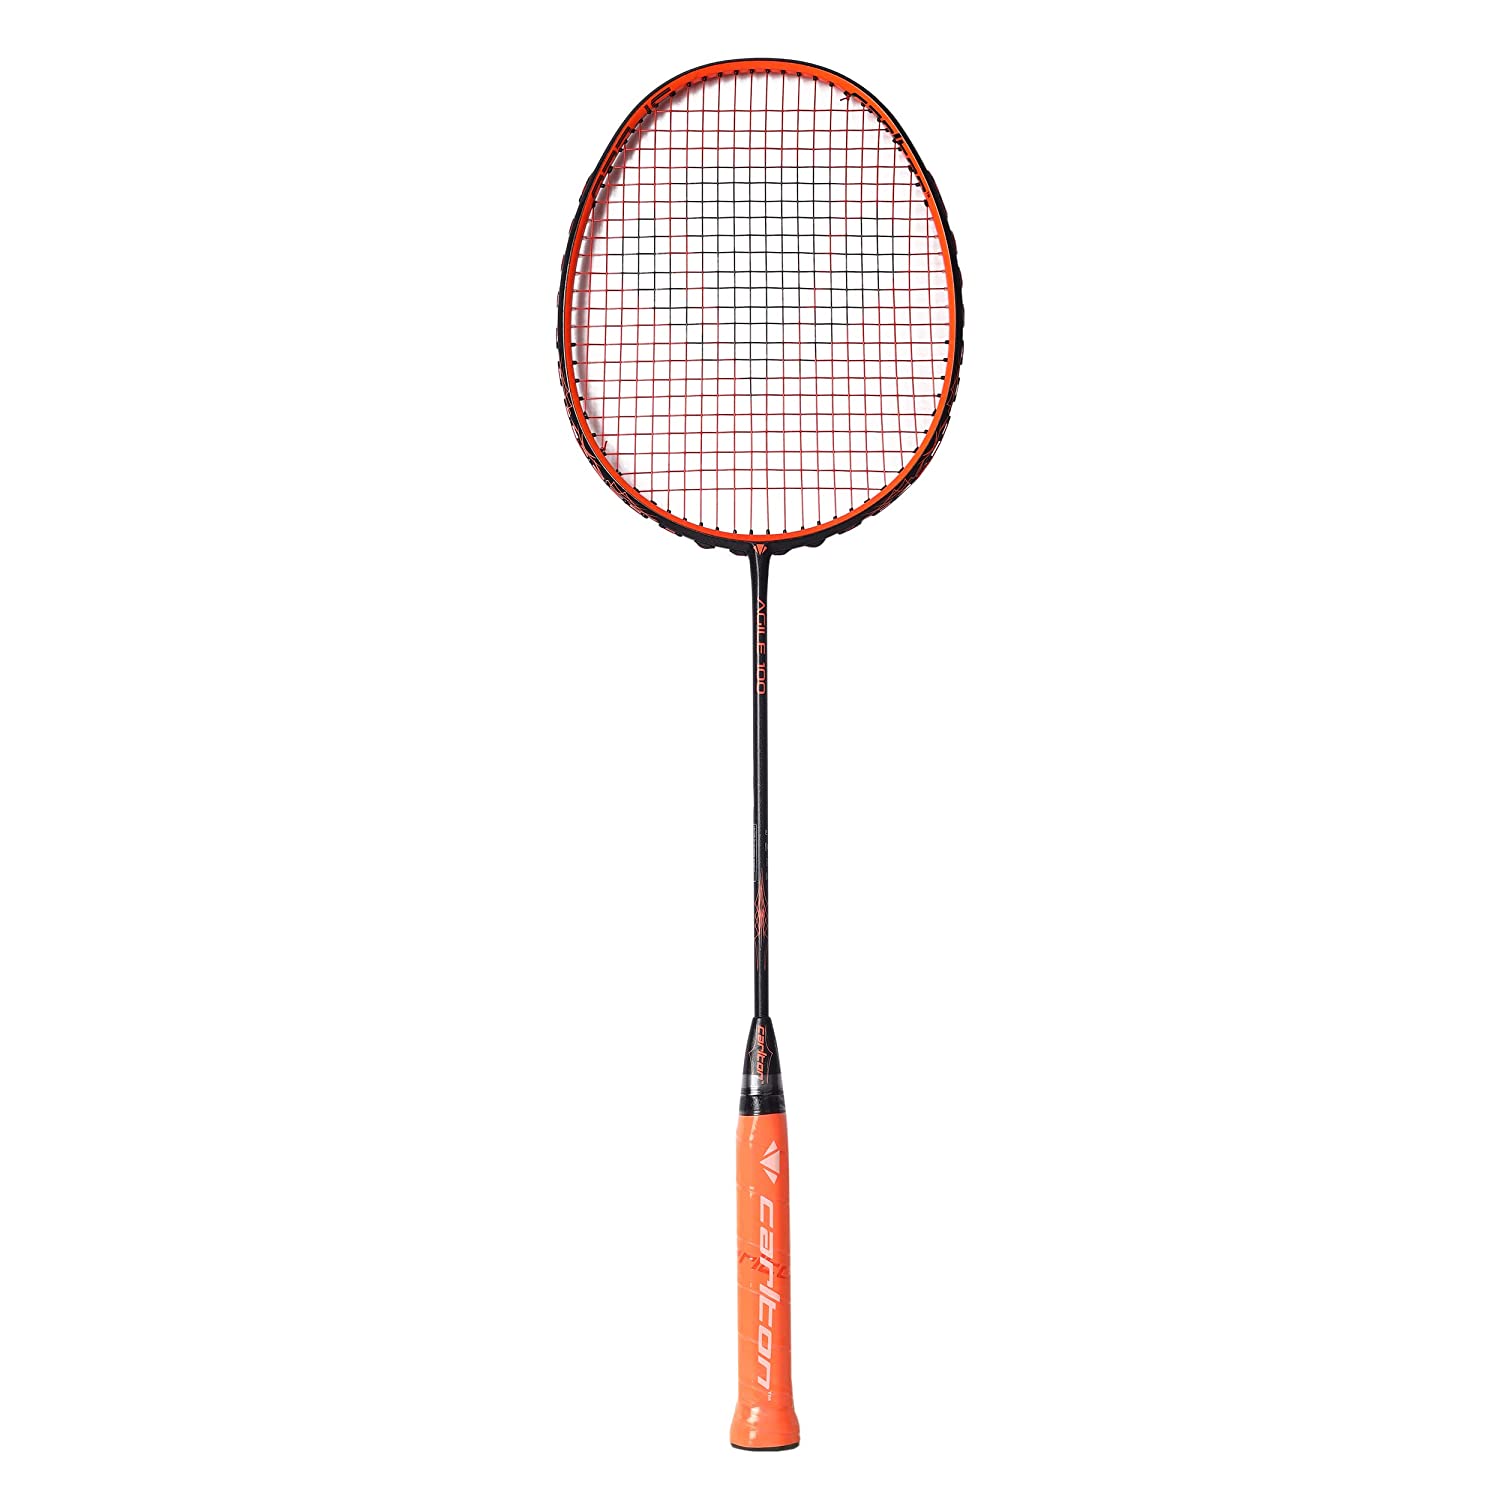 Carlon Agile 100 Strung Badminton Racquet, Black/Orange - Best Price online Prokicksports.com